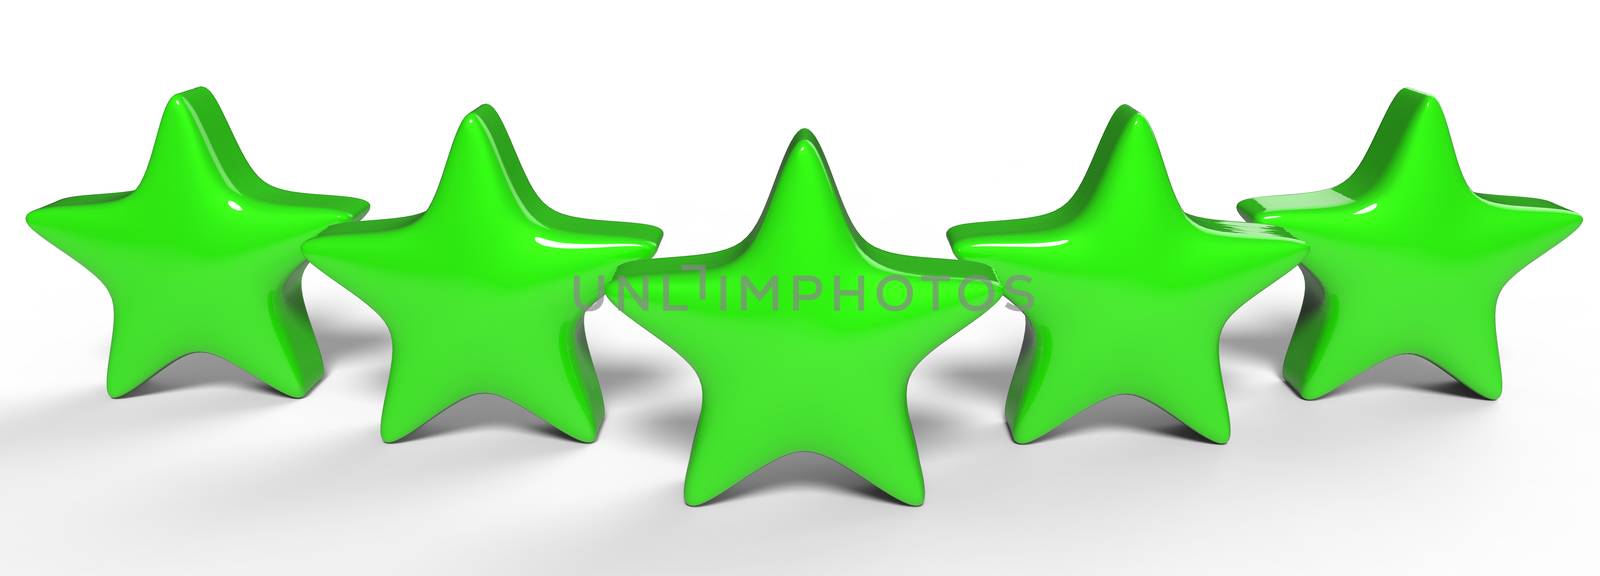 3d five green star on color background. Render and illustration of golden star for premium